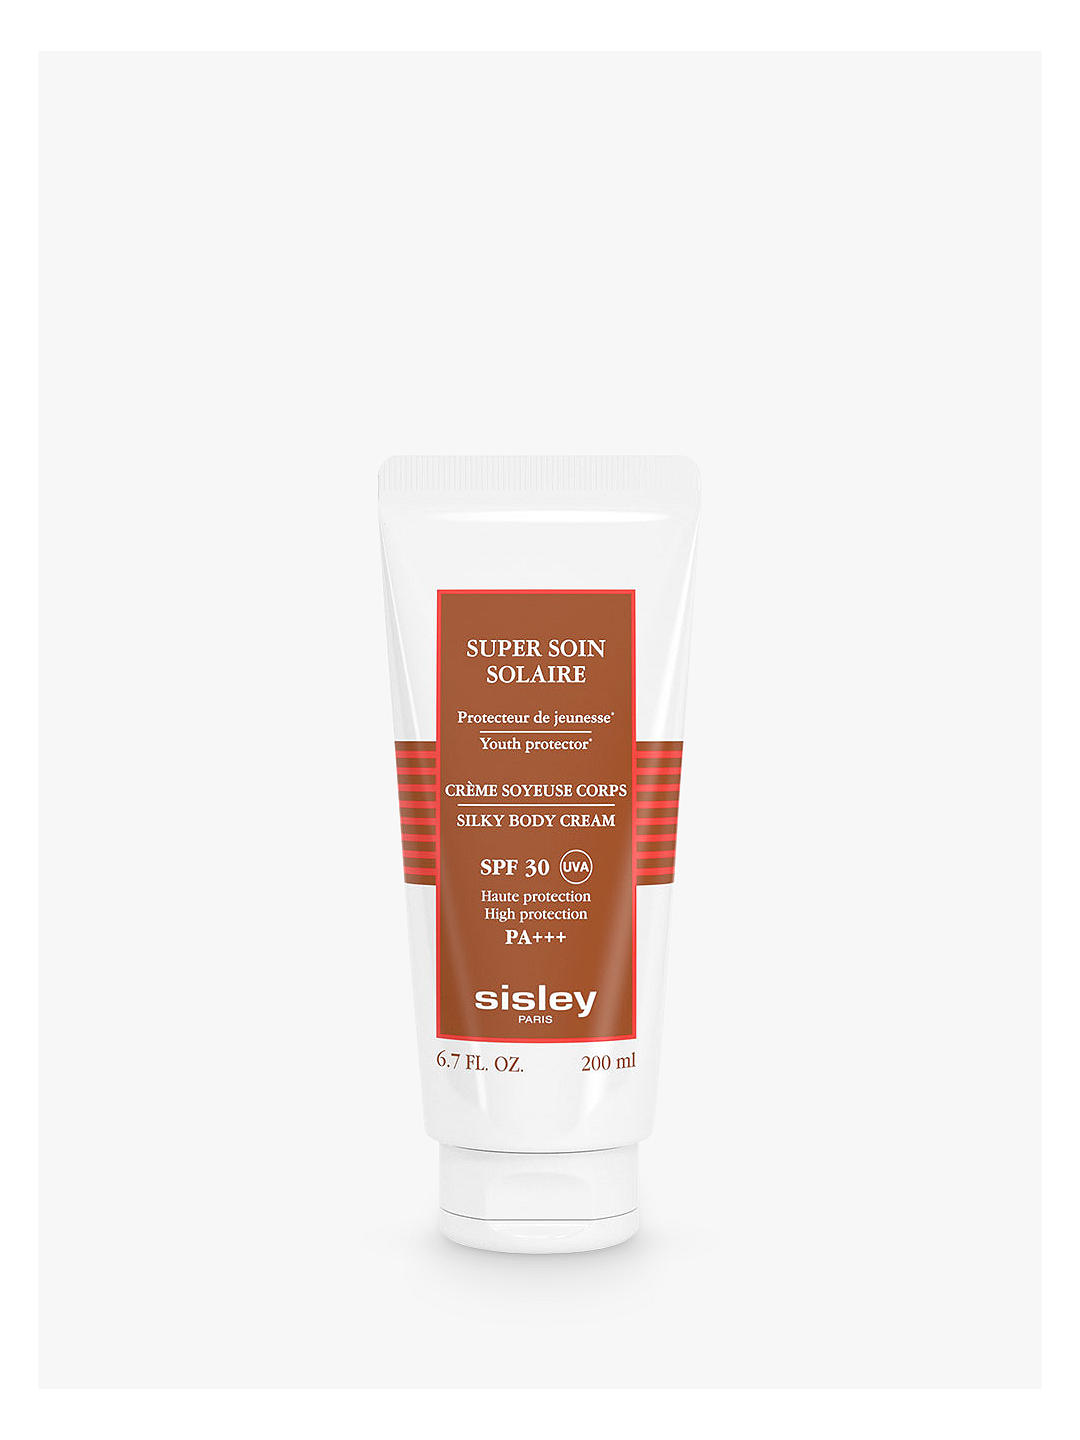 Sisley-Paris Super Soin Solaire Silky Body Cream SPF 30, 200ml 1